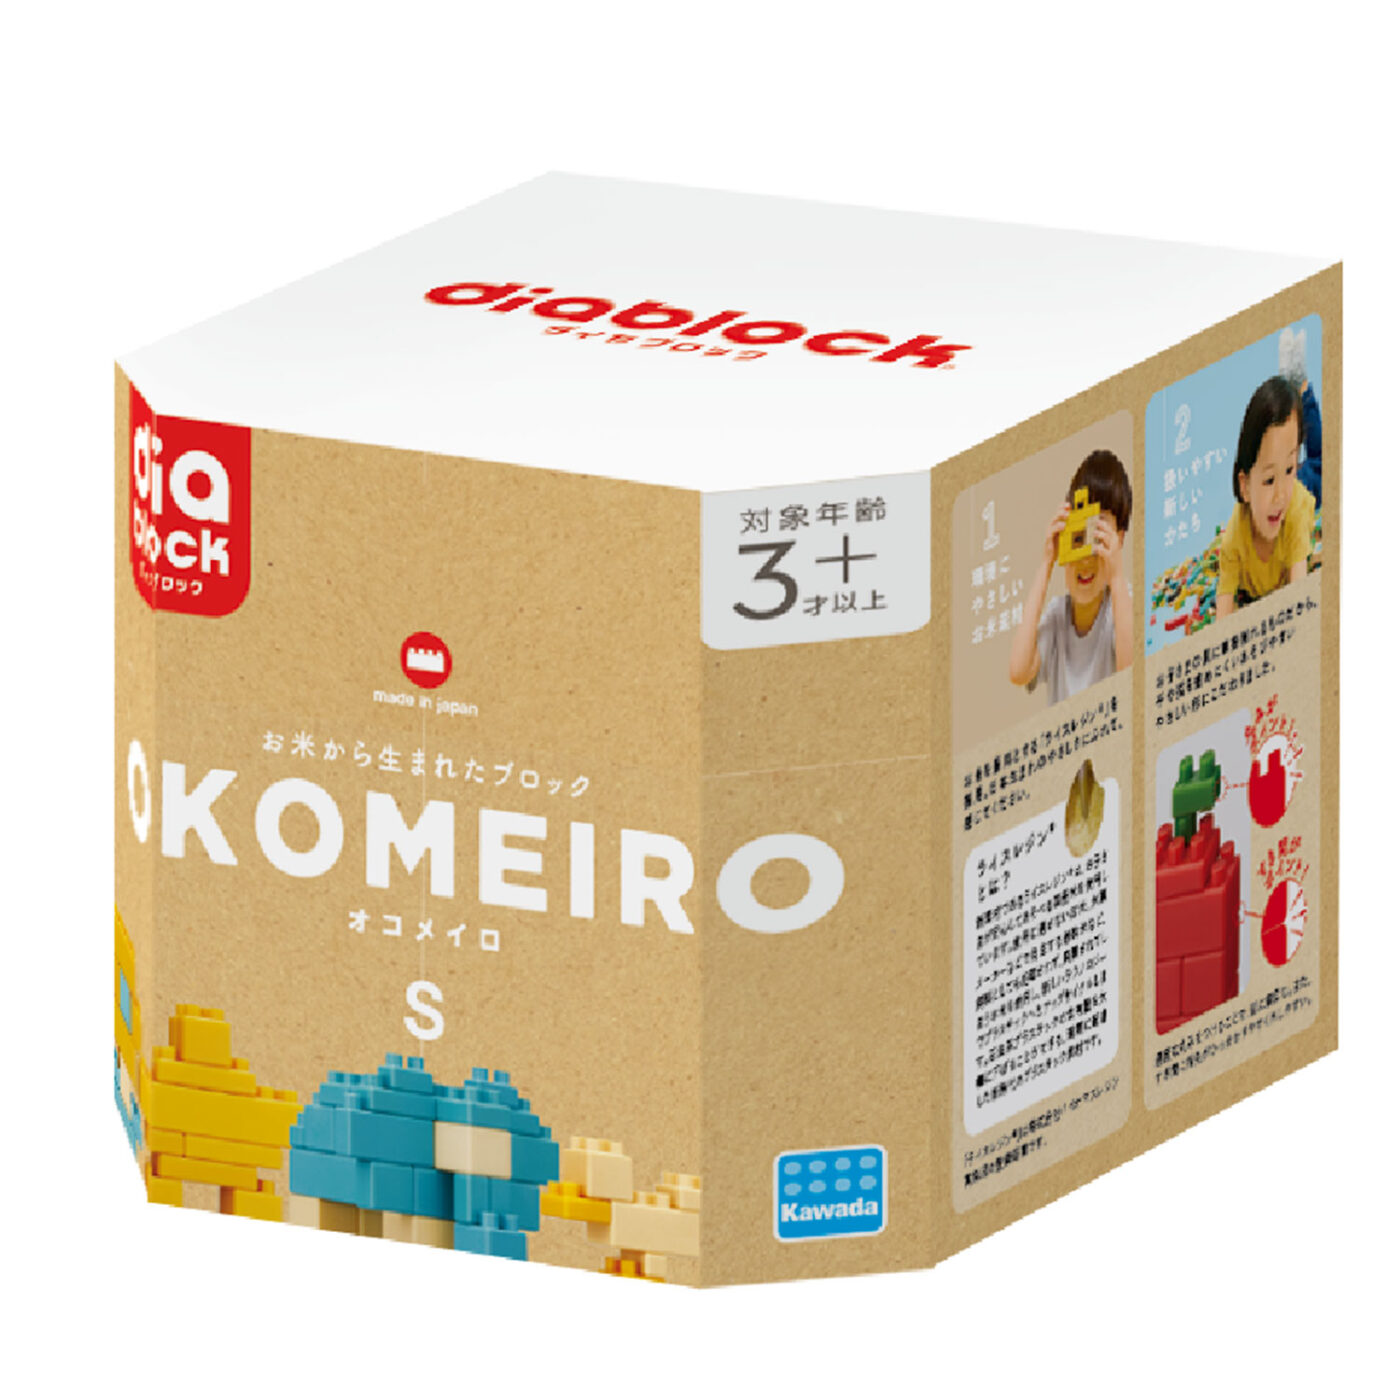 OKOMEIRO Sの商品画像